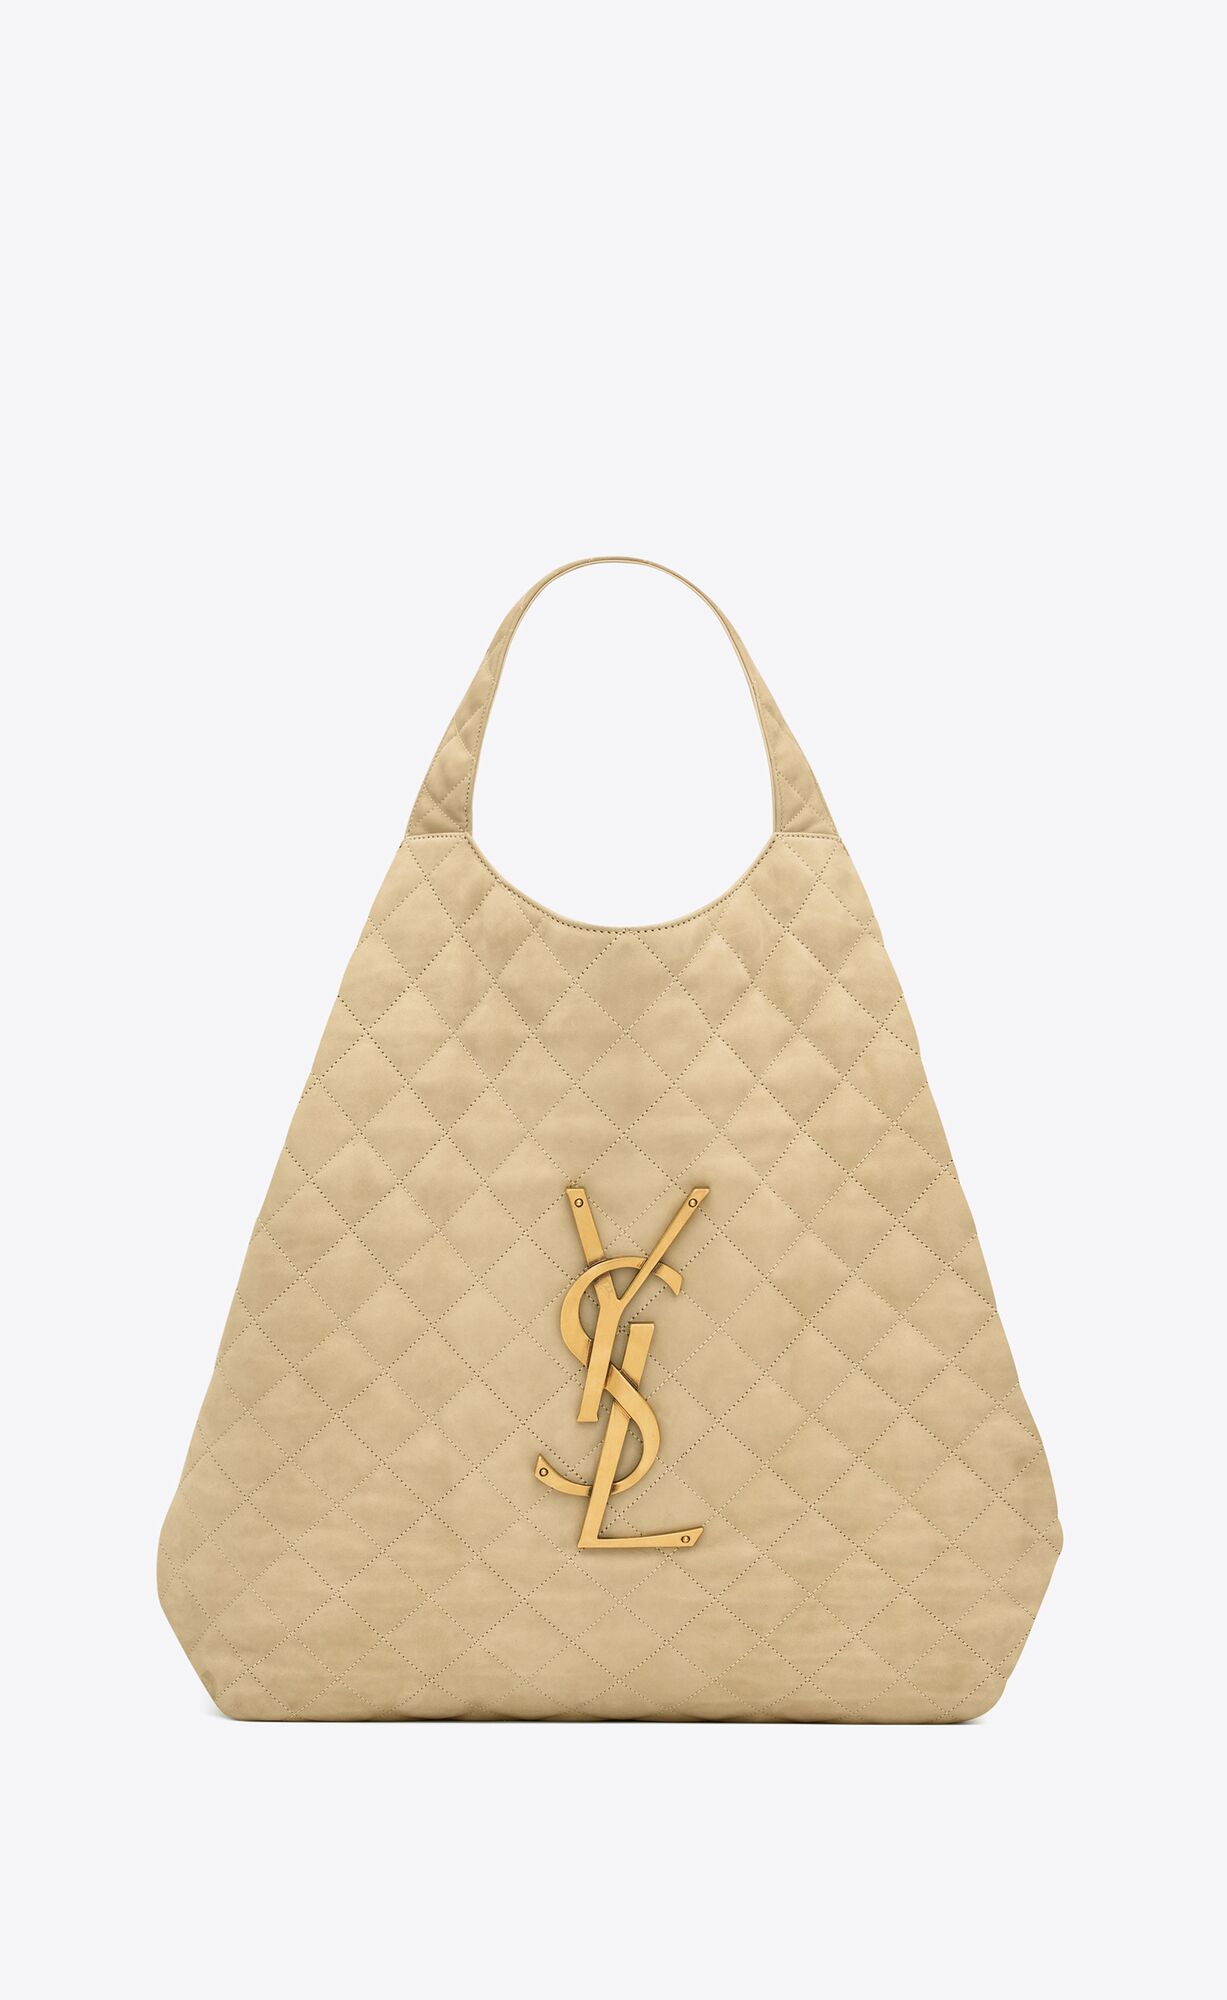 ICARE maxi shopping bag in quilted nubuck suede | Saint Laurent | YSL.com | Saint Laurent Inc. (Global)